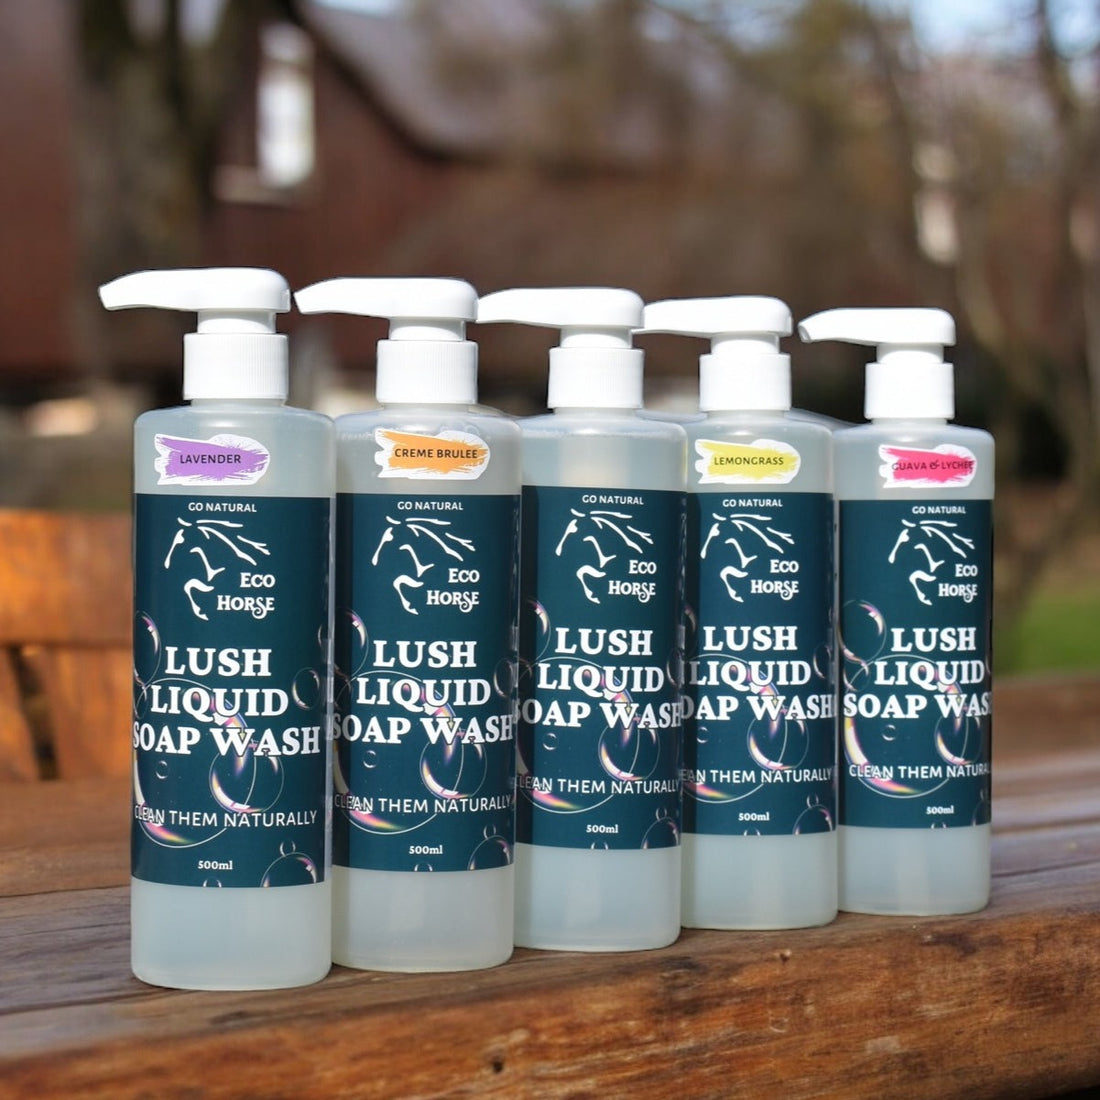 Lush Liquid Soap Wash